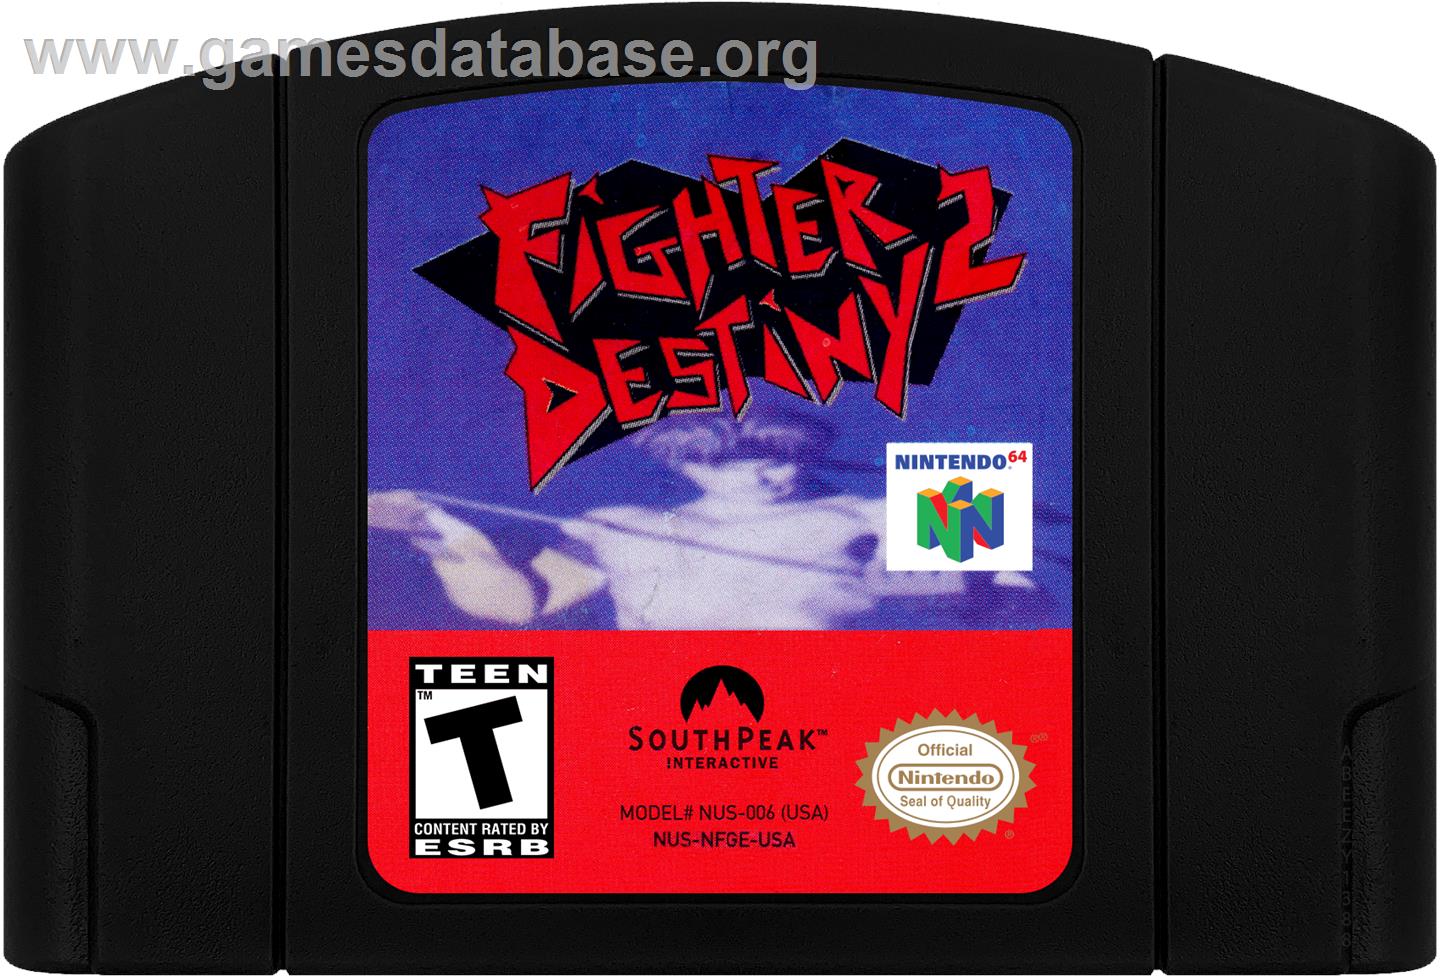 Fighter Destiny 2 - Nintendo N64 - Artwork - Cartridge